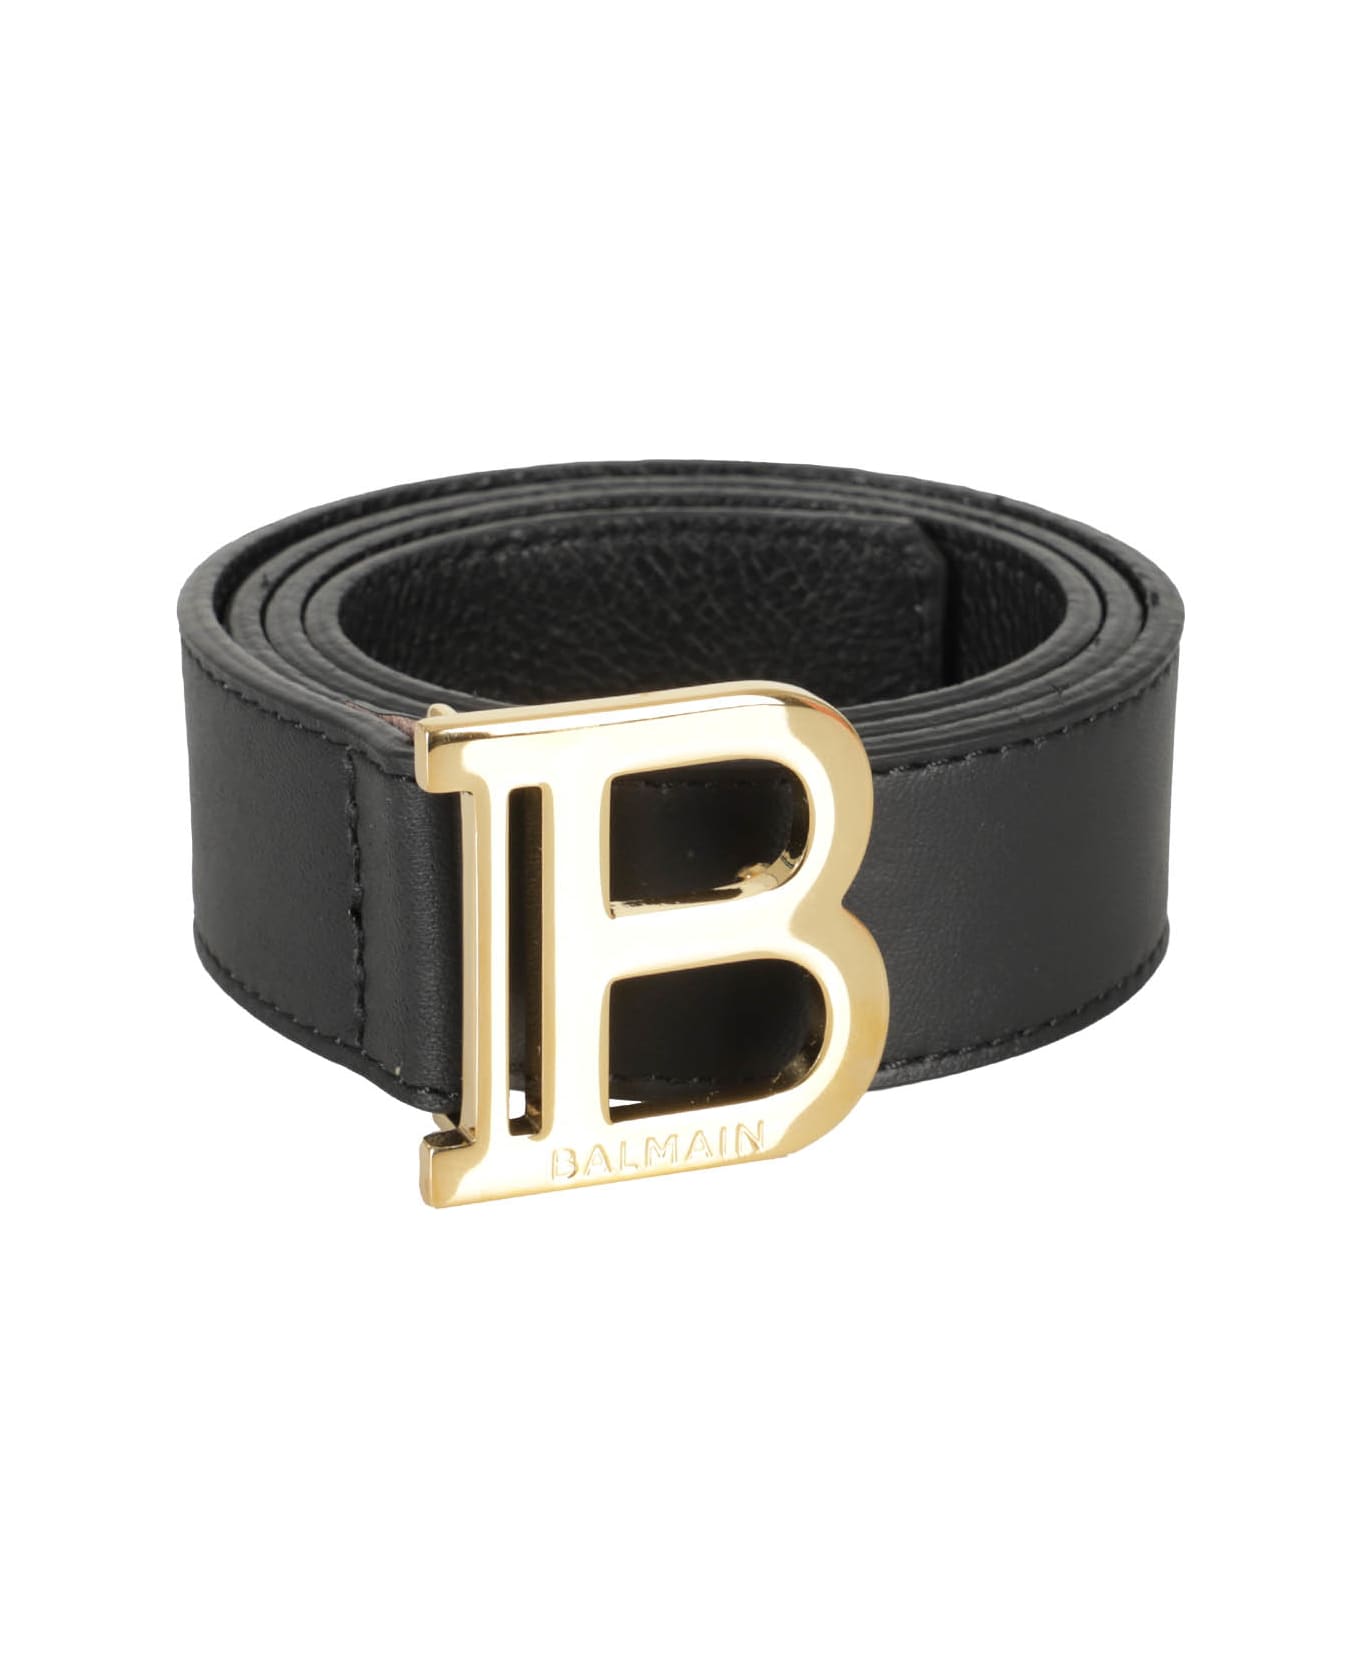 Balmain Belts - Or Black Gold